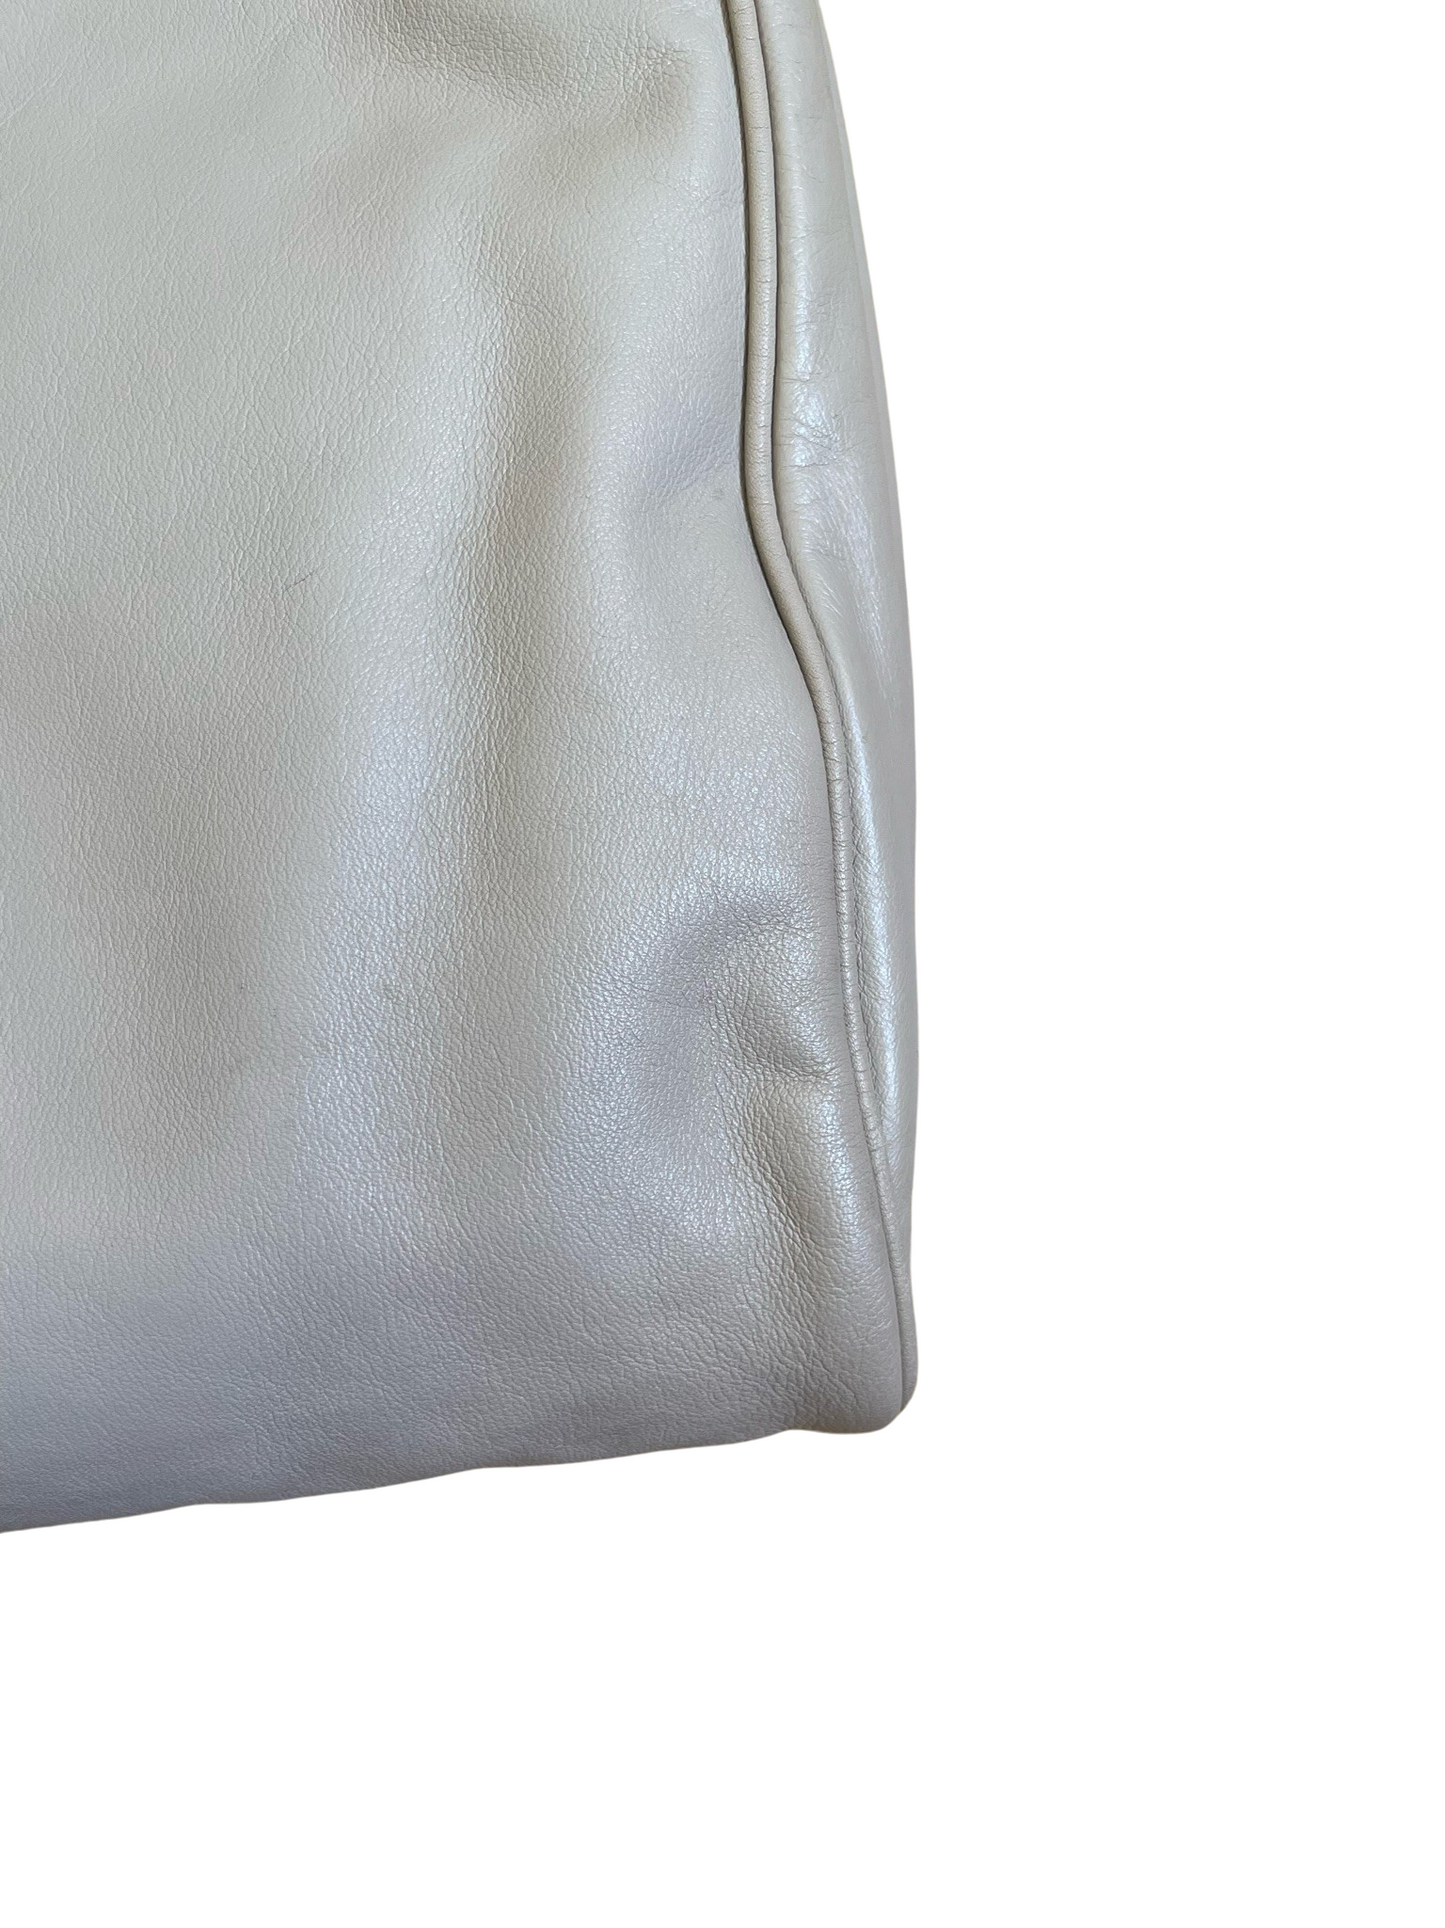 Prada Beige Leather Tote Bag